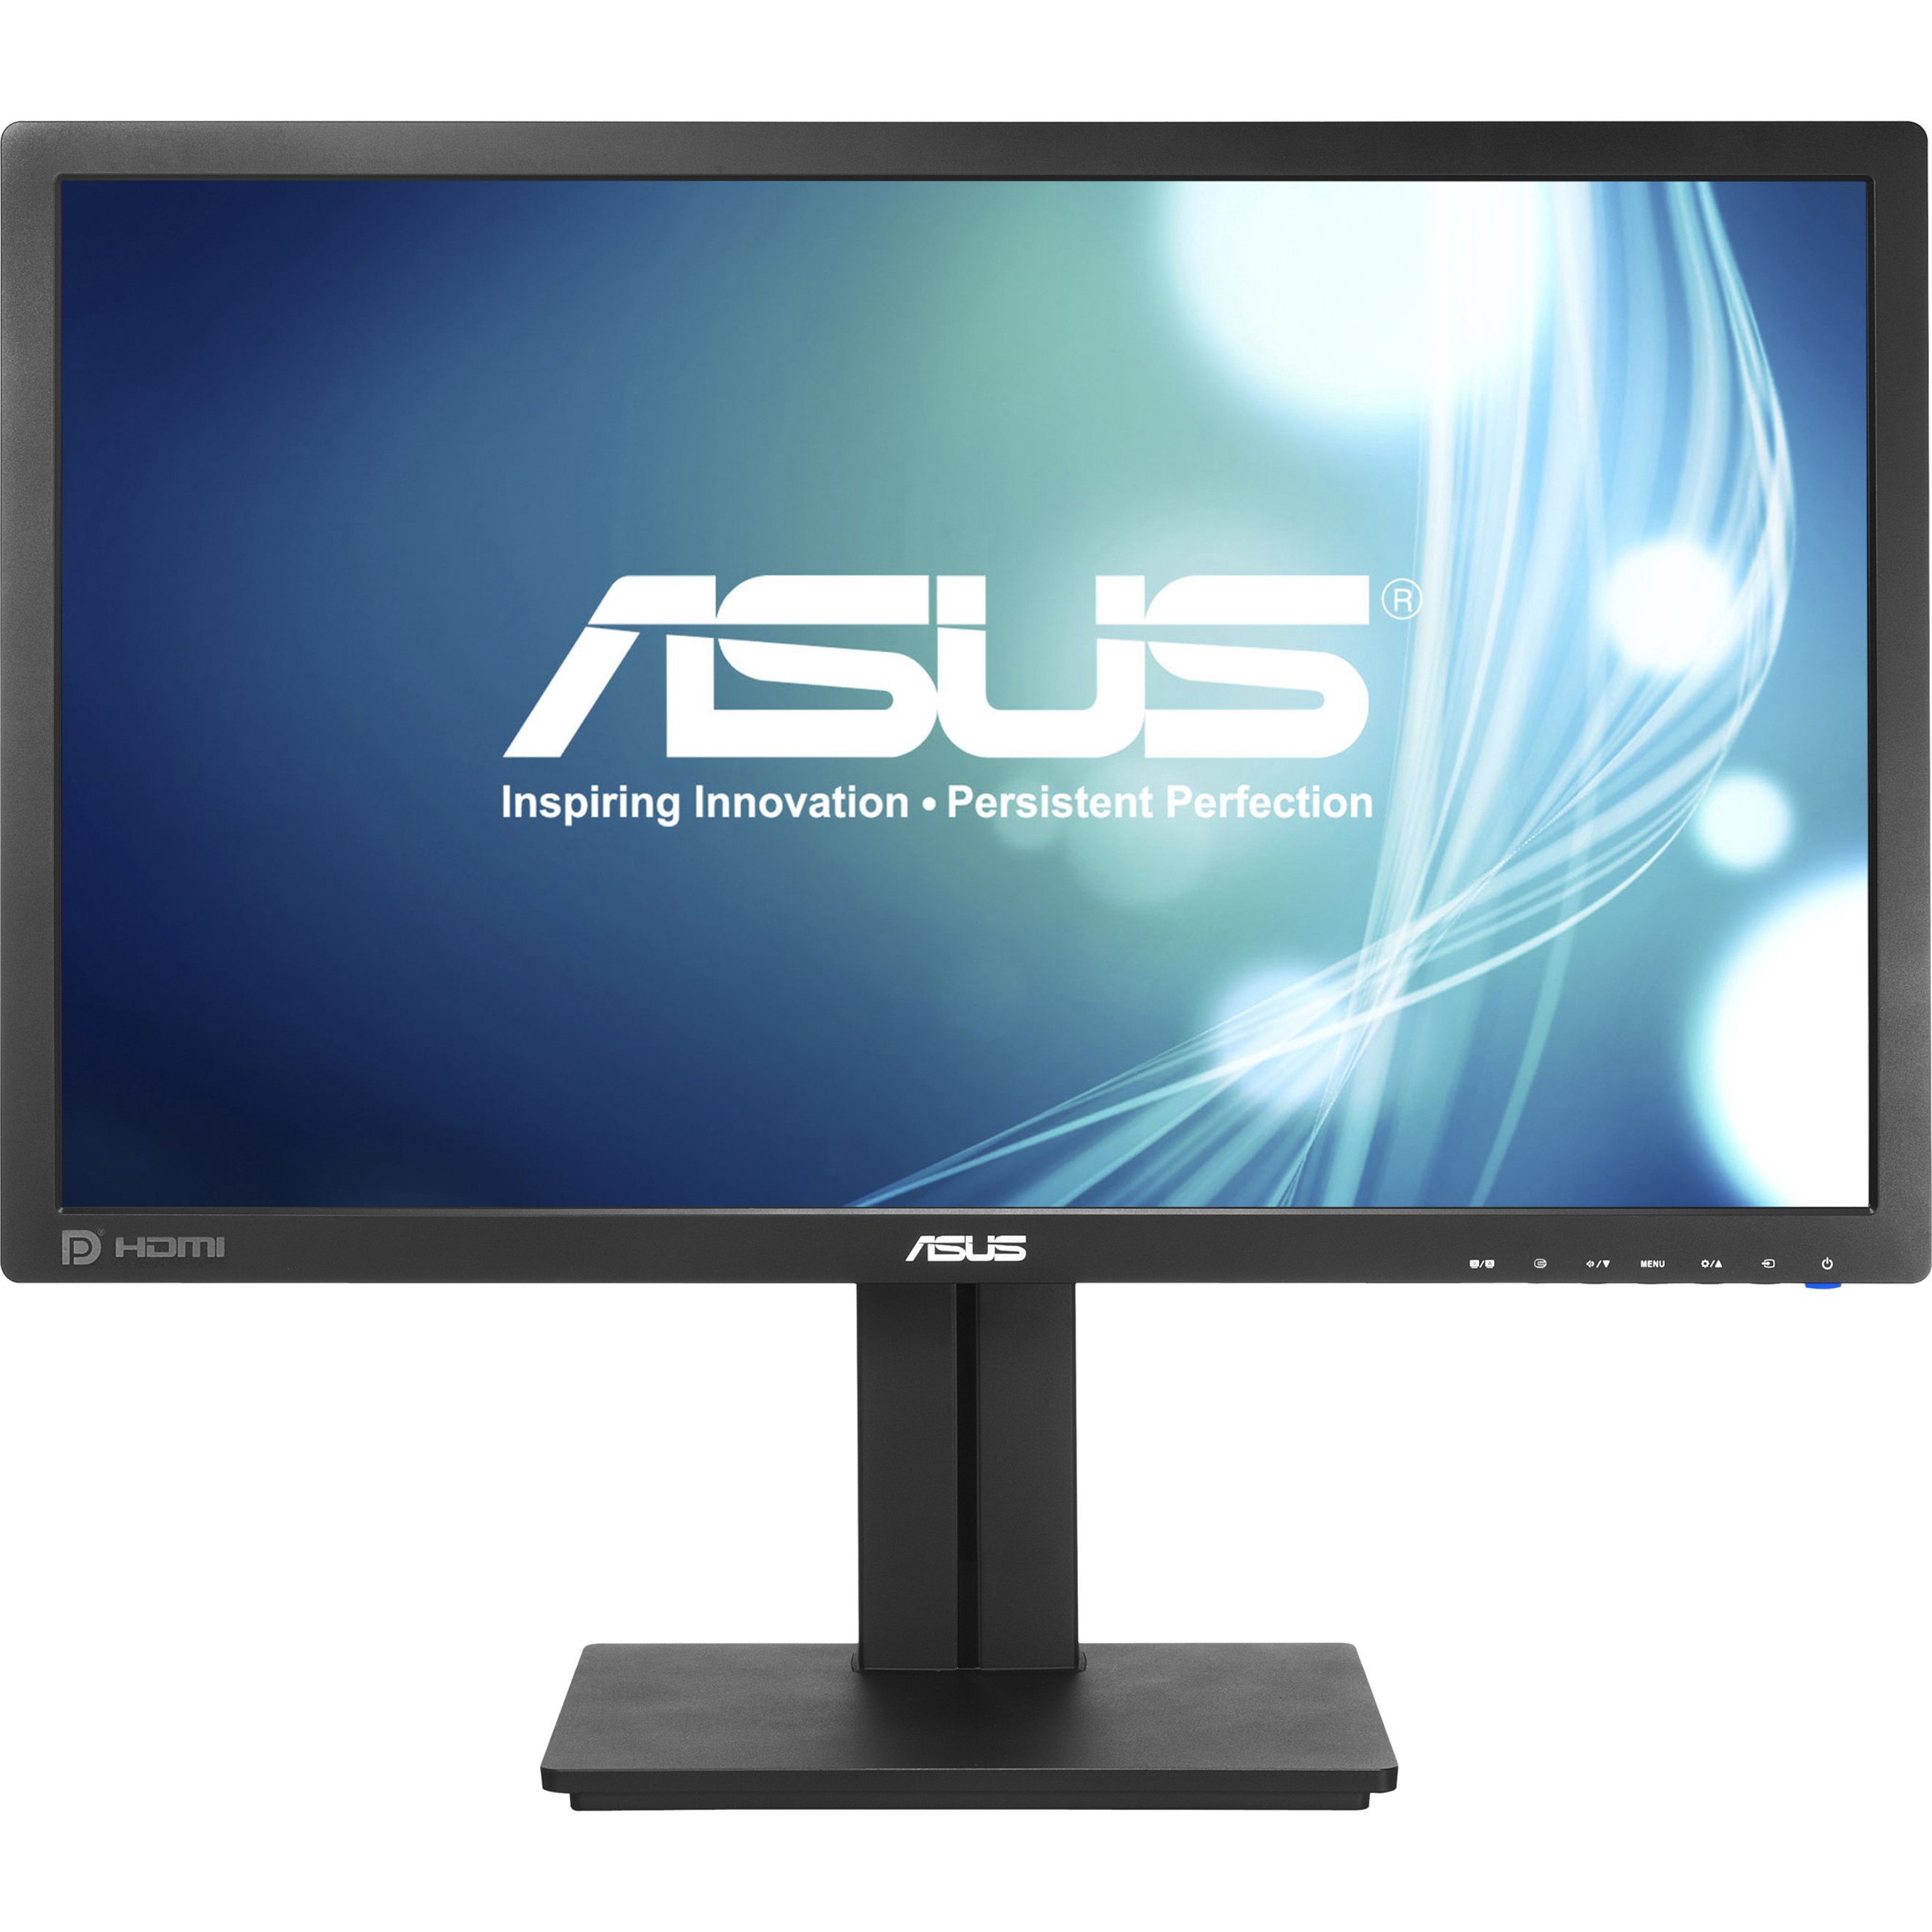 ASUS 27" 1440P Eye Care Monitor (PB278Q), QHD (2560 x 1440), IPS, DisplayPort, HDMI, DVI - image 4 of 5